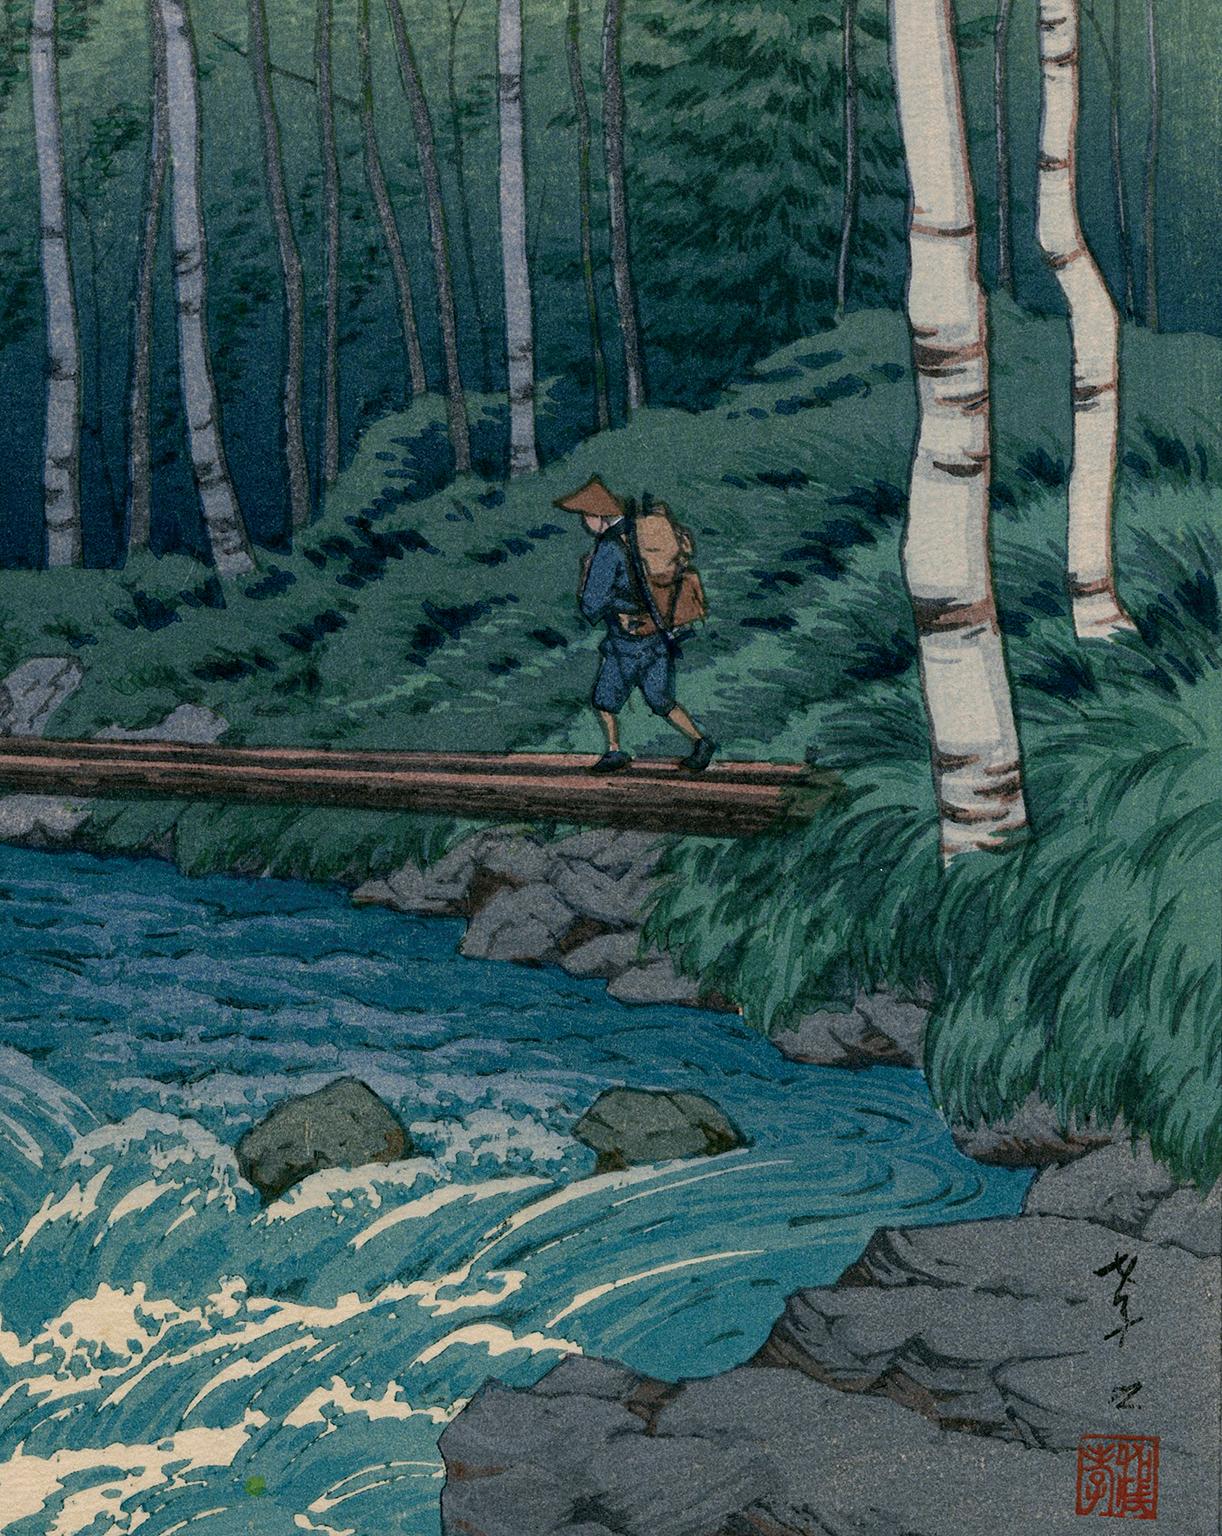 Akeyuku Takegawa (Takegawa River at Dawn) — Japanese woodblock print - Print by Ito Takashi